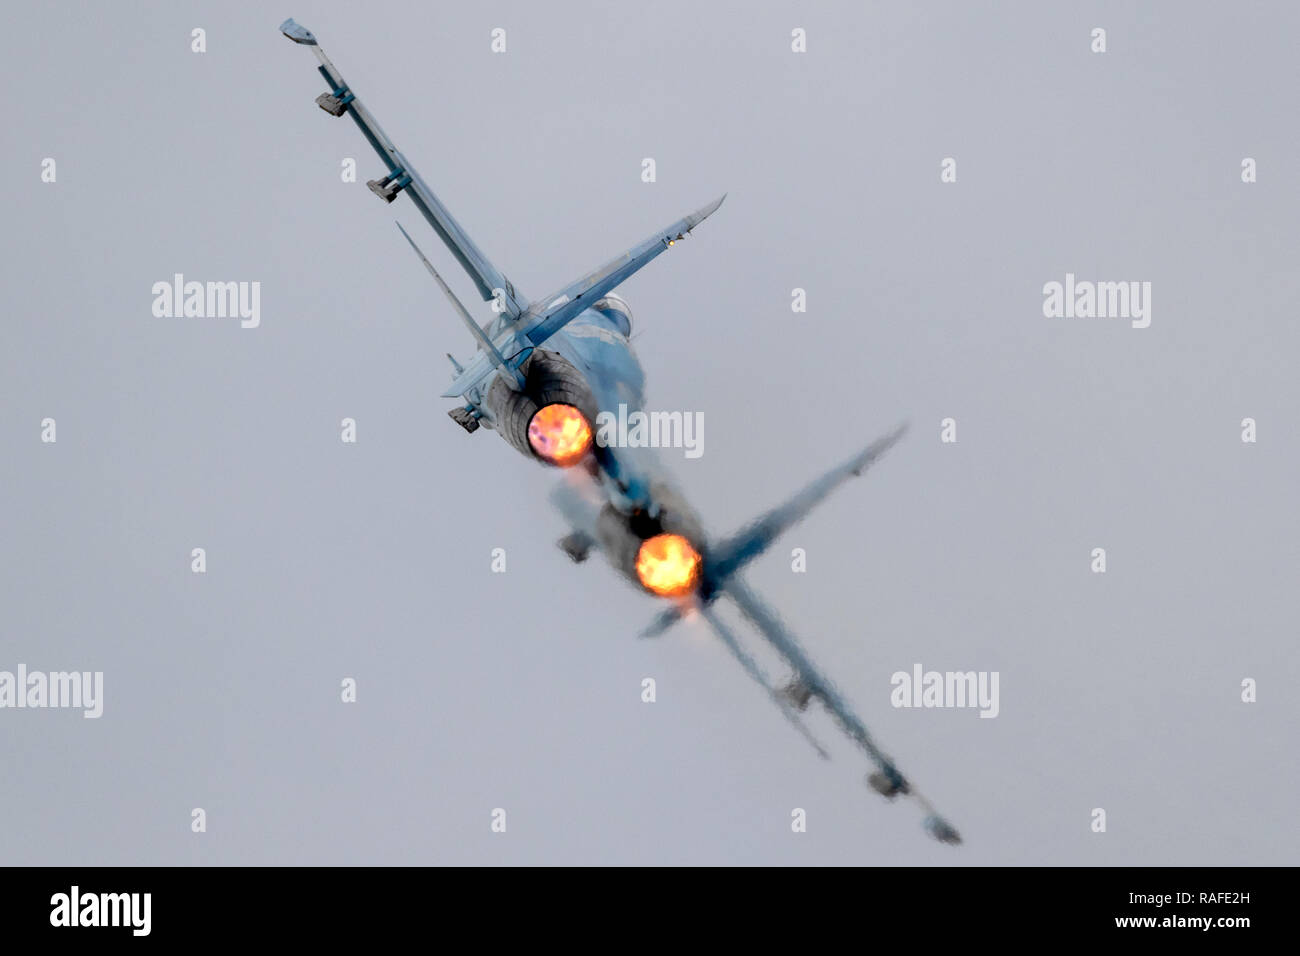 military-fighter-jet-with-full-afterburner-take-off-RAFE2H.jpg